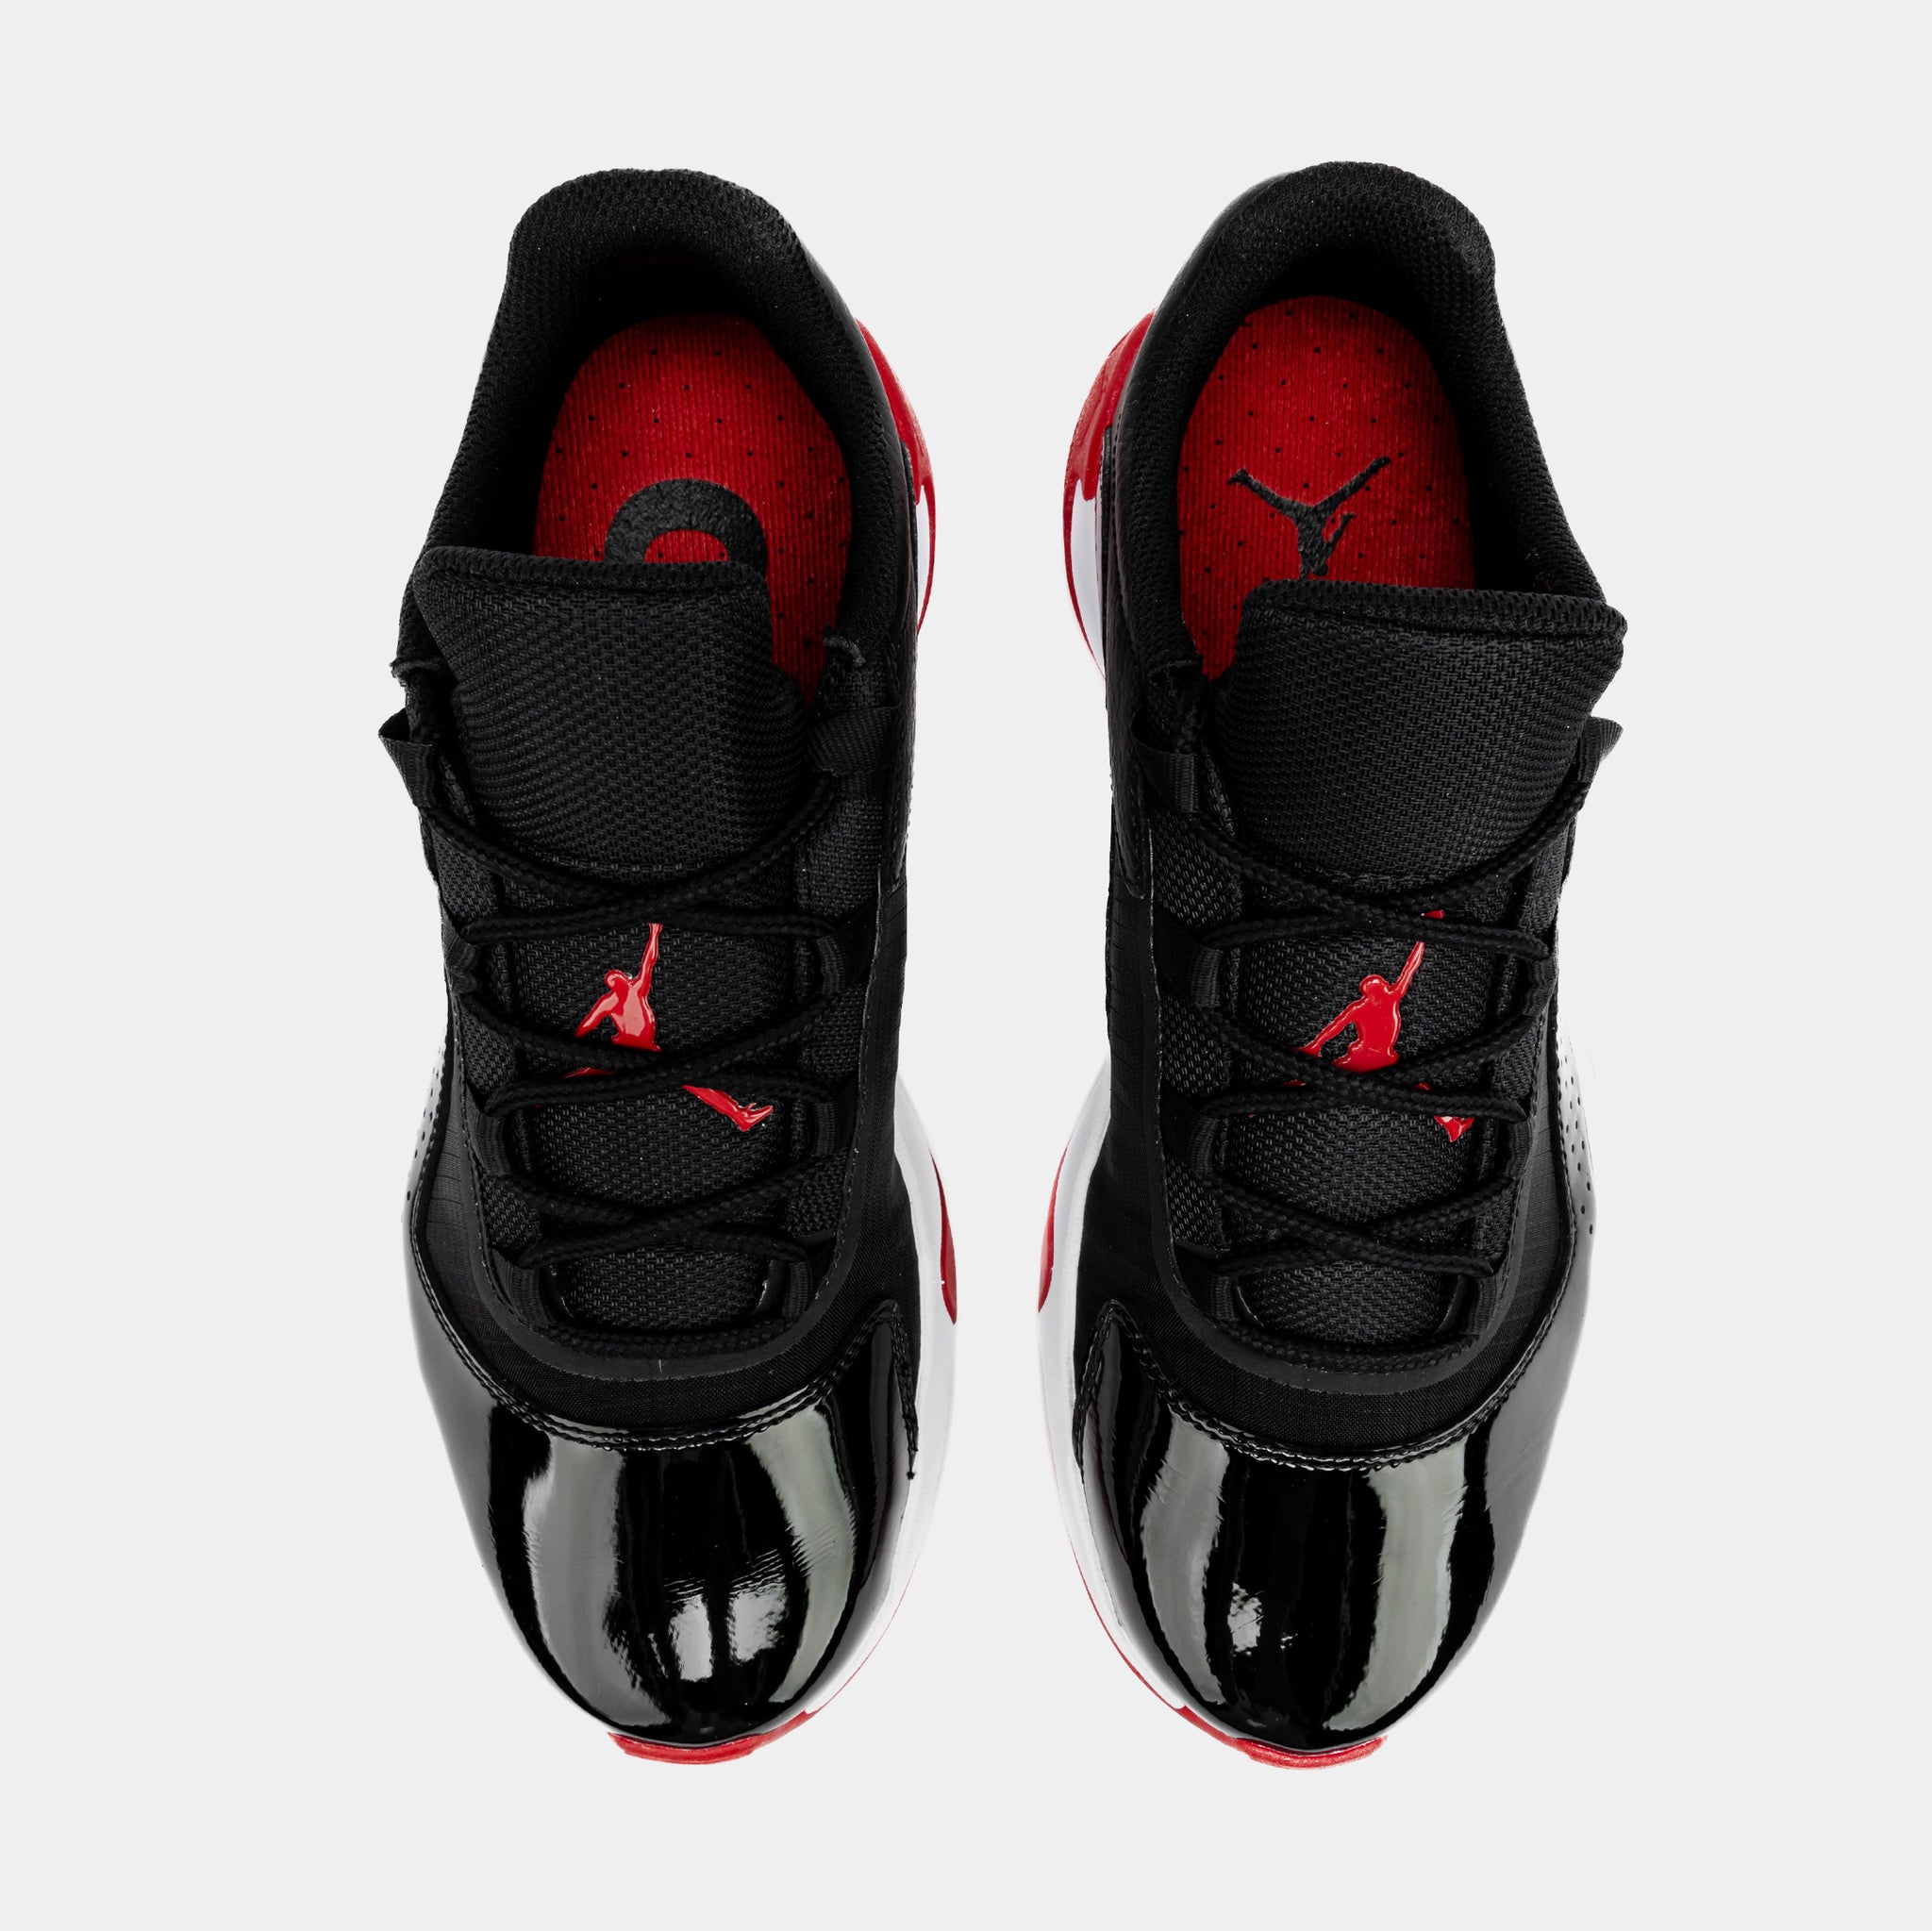 Air Jordan 11 CMFT Low Mens Lifestyle Shoes (Red/Black)